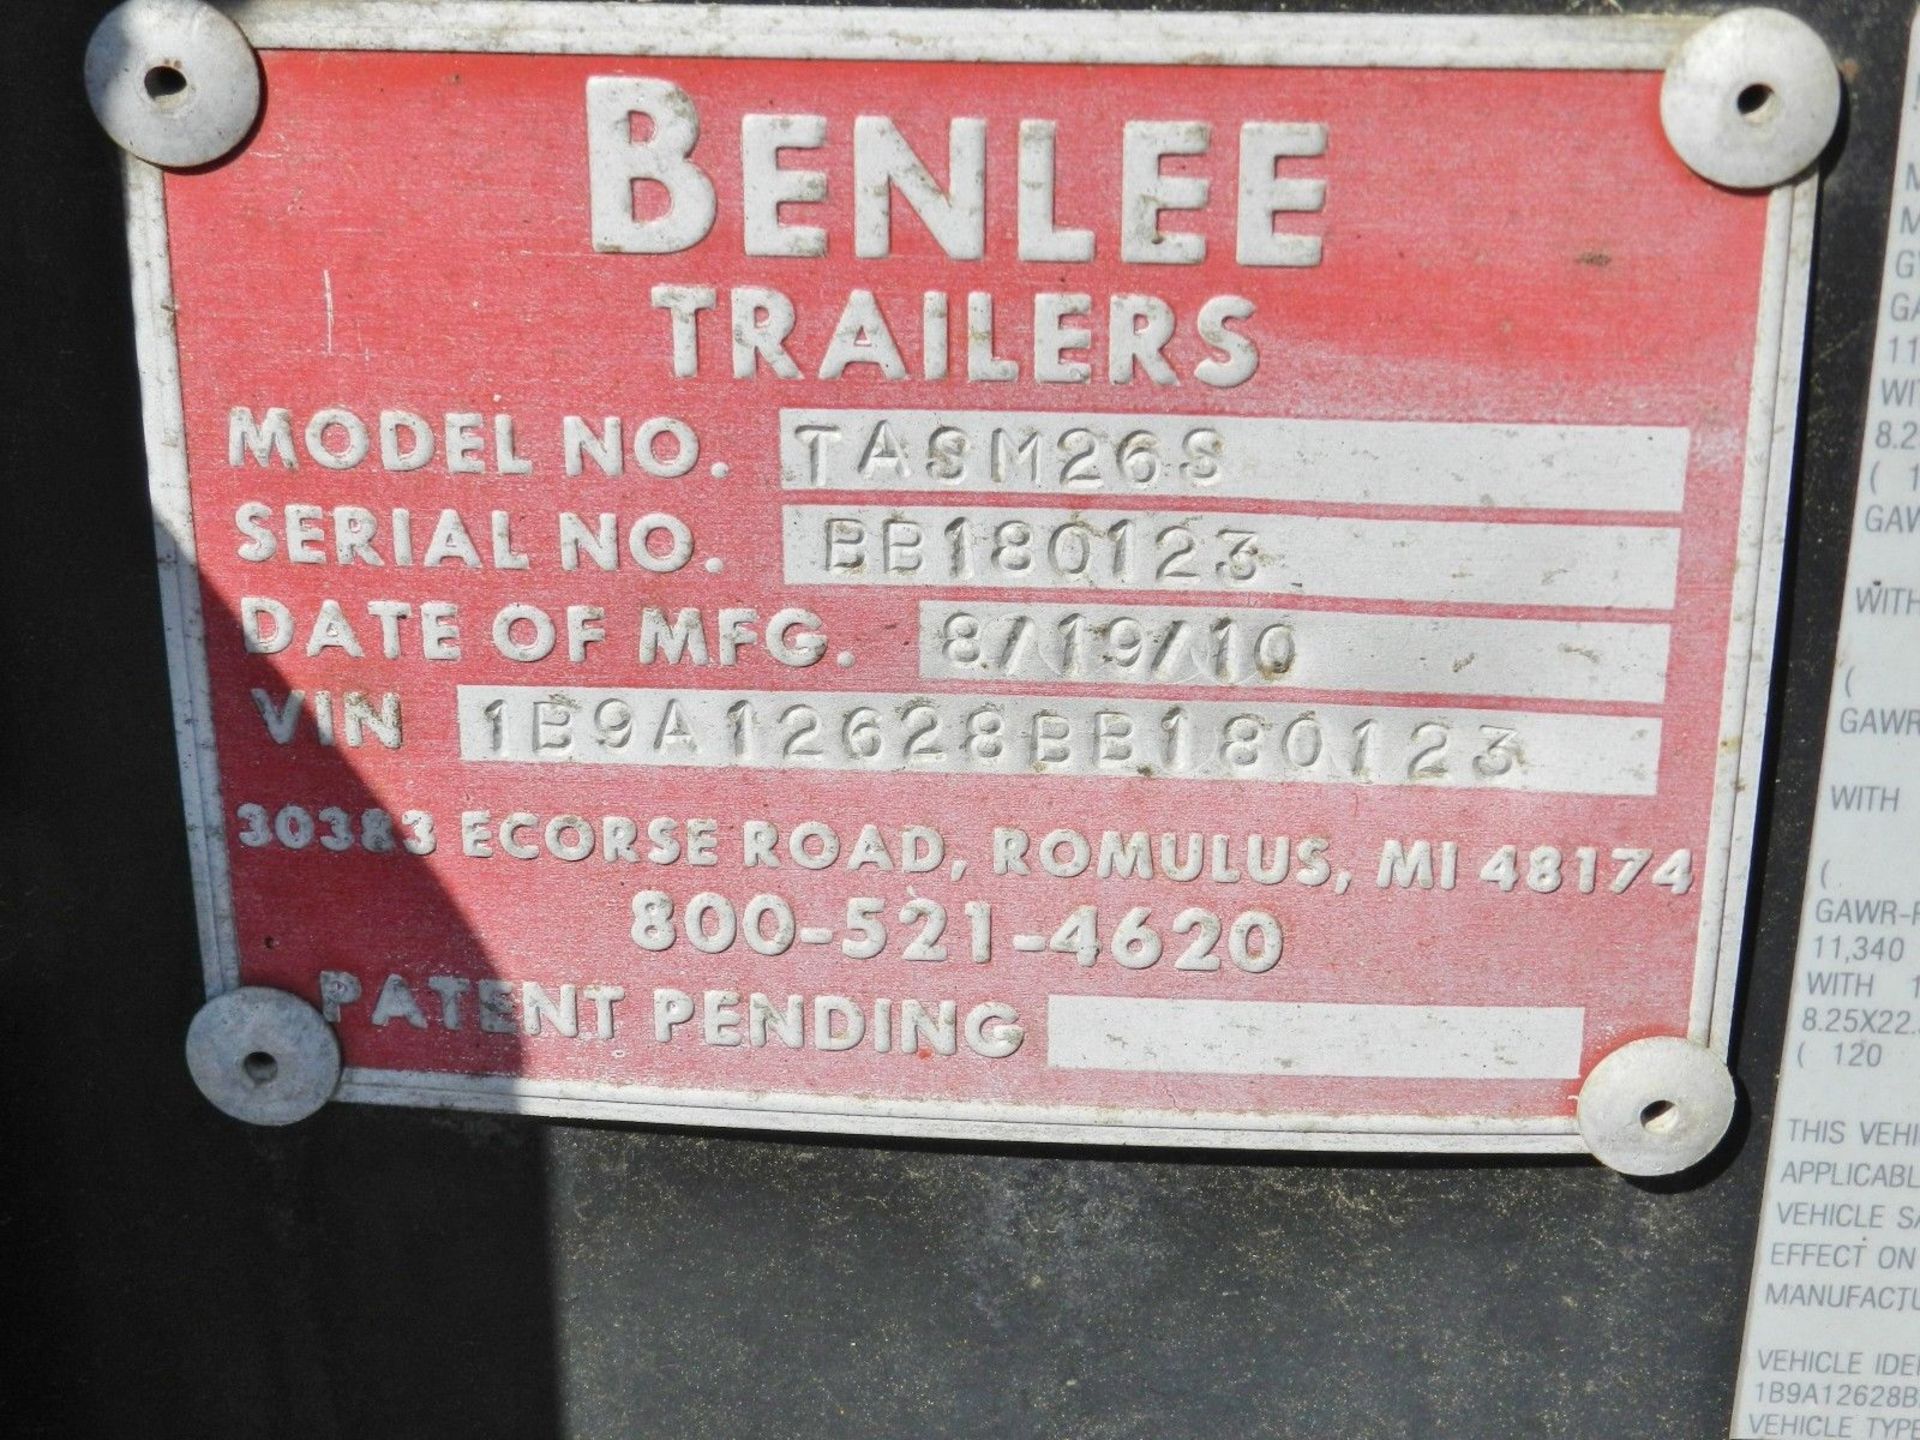 2010 Benlee Roll-Off Trailer - Image 3 of 5